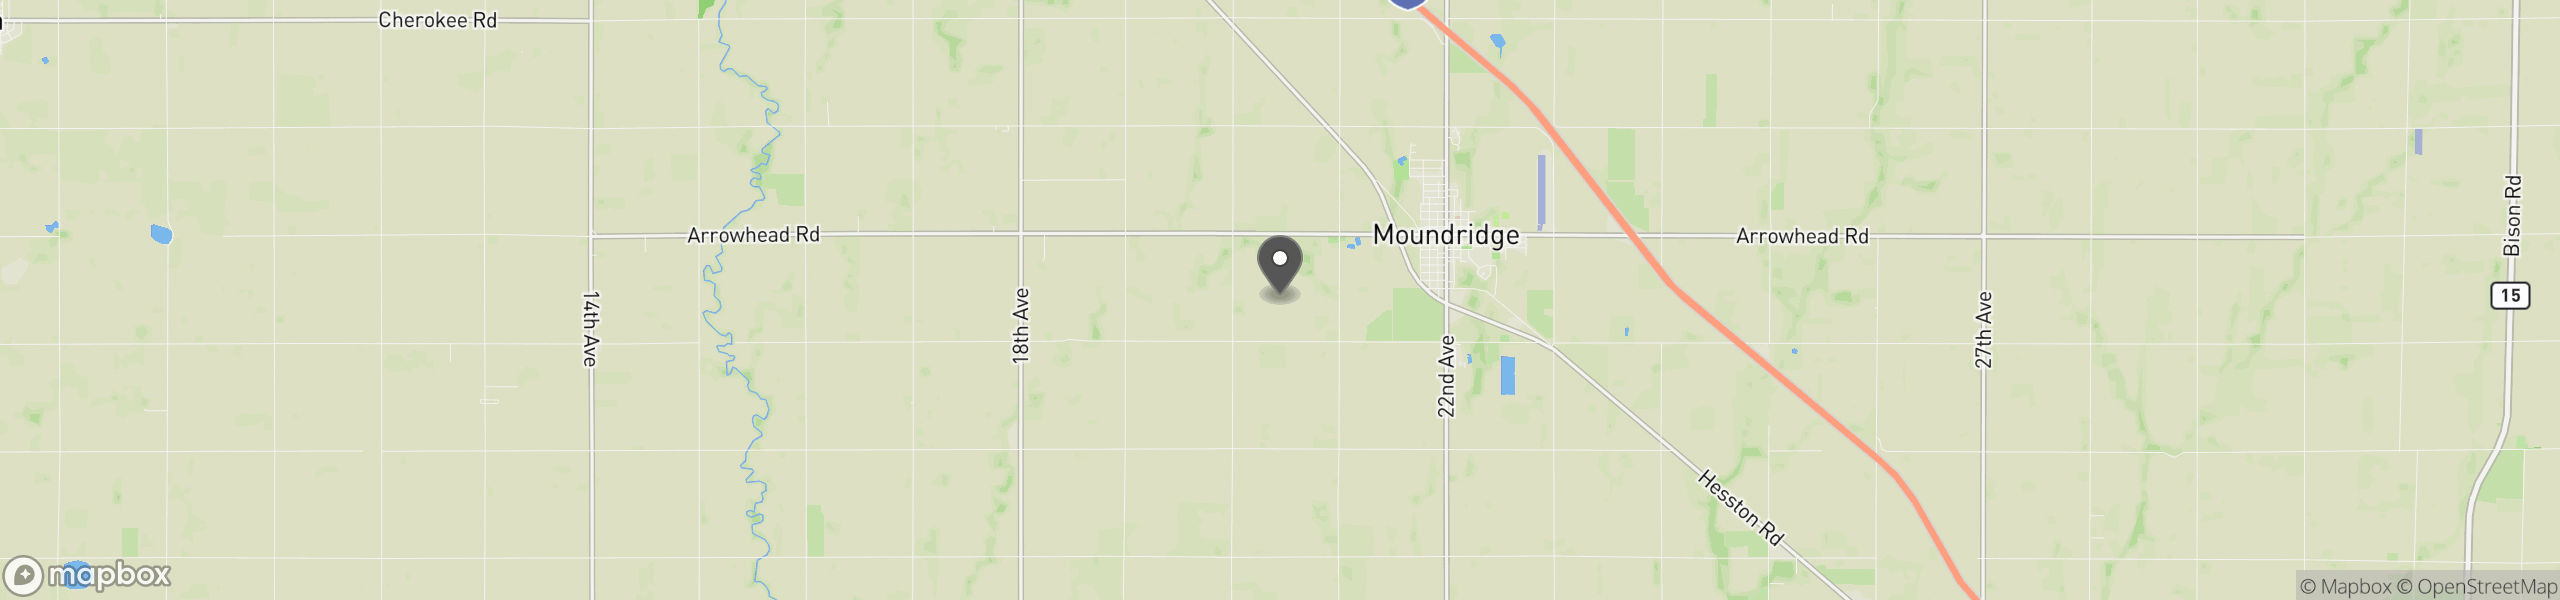 Moundridge, KS 67107